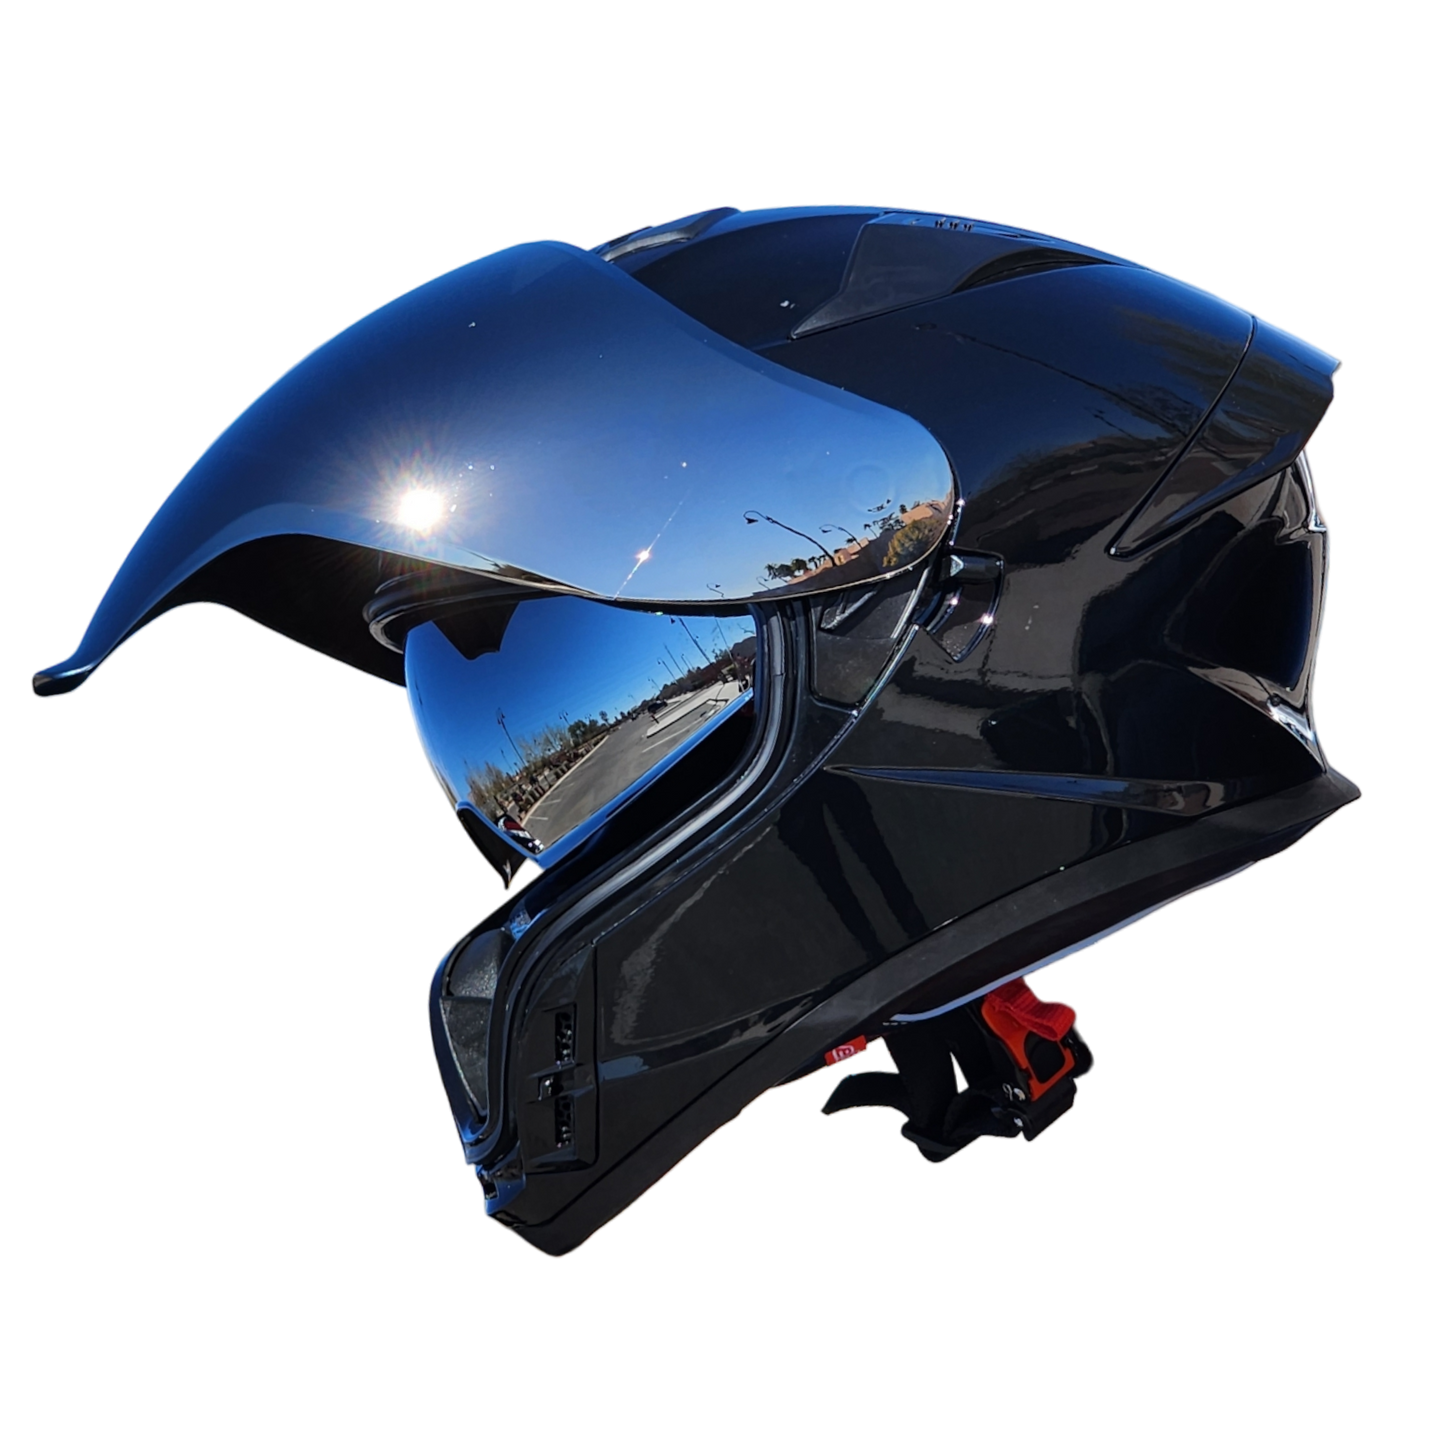 Vega AIR GPX Helmet - Special Innovated Design